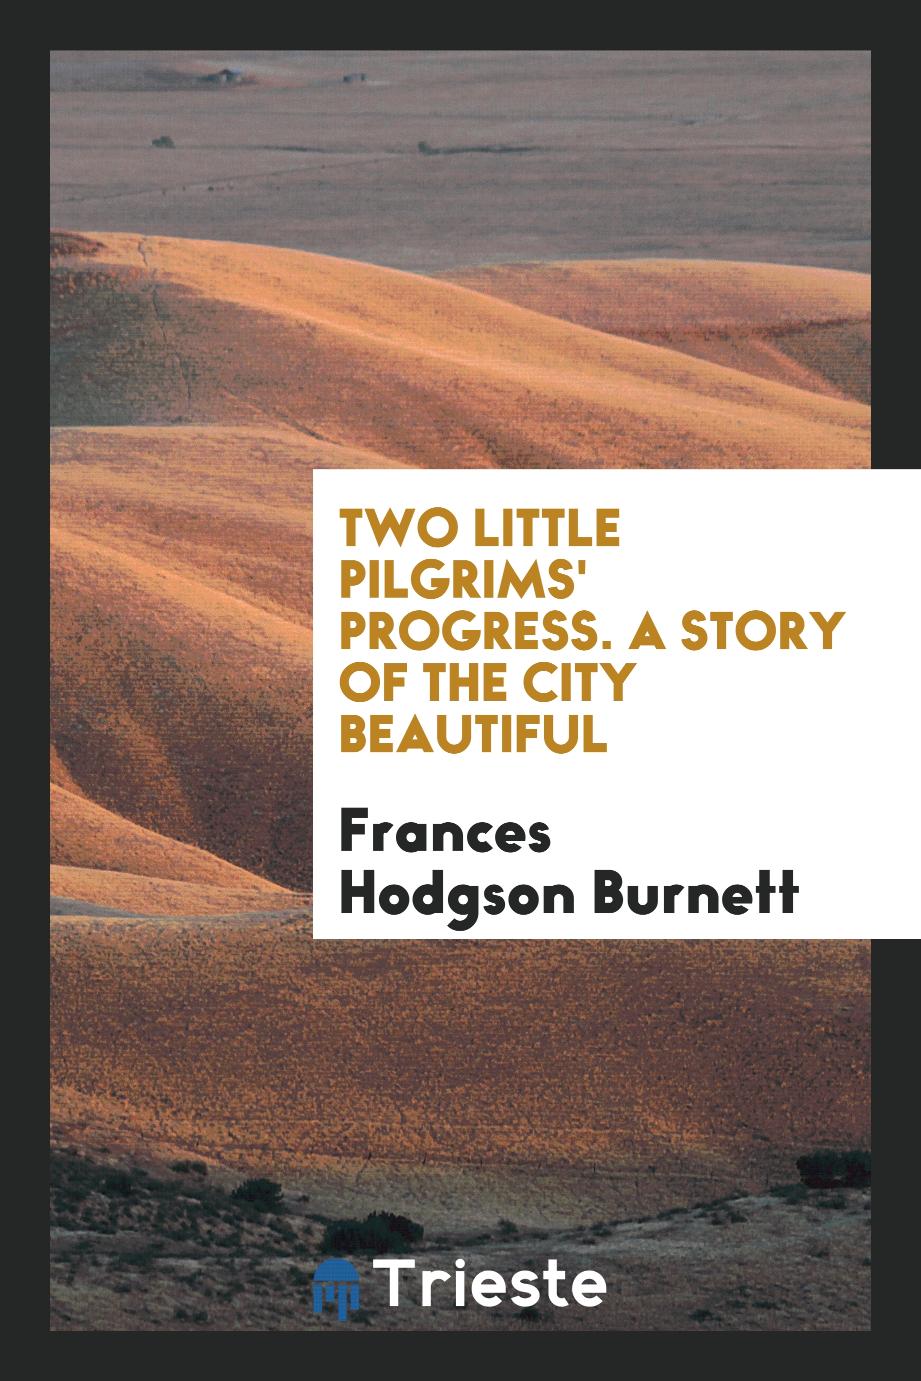 Frances Hodgson Burnett - Two little pilgrims' progress. A story of the city beautiful